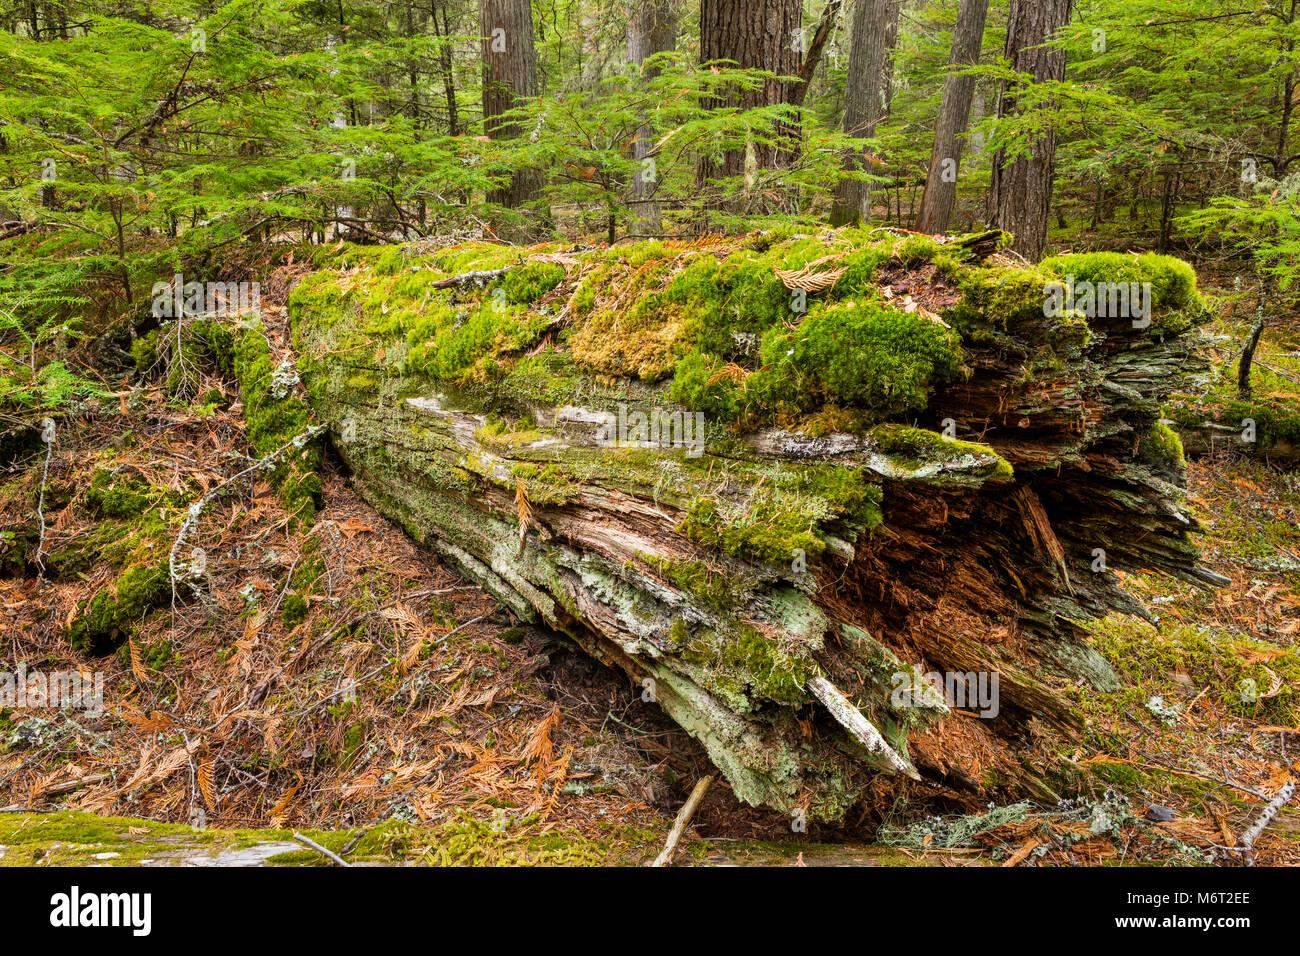 fallen-log-with-moss-glacier-national-park-montana-M6T2EE.jpg